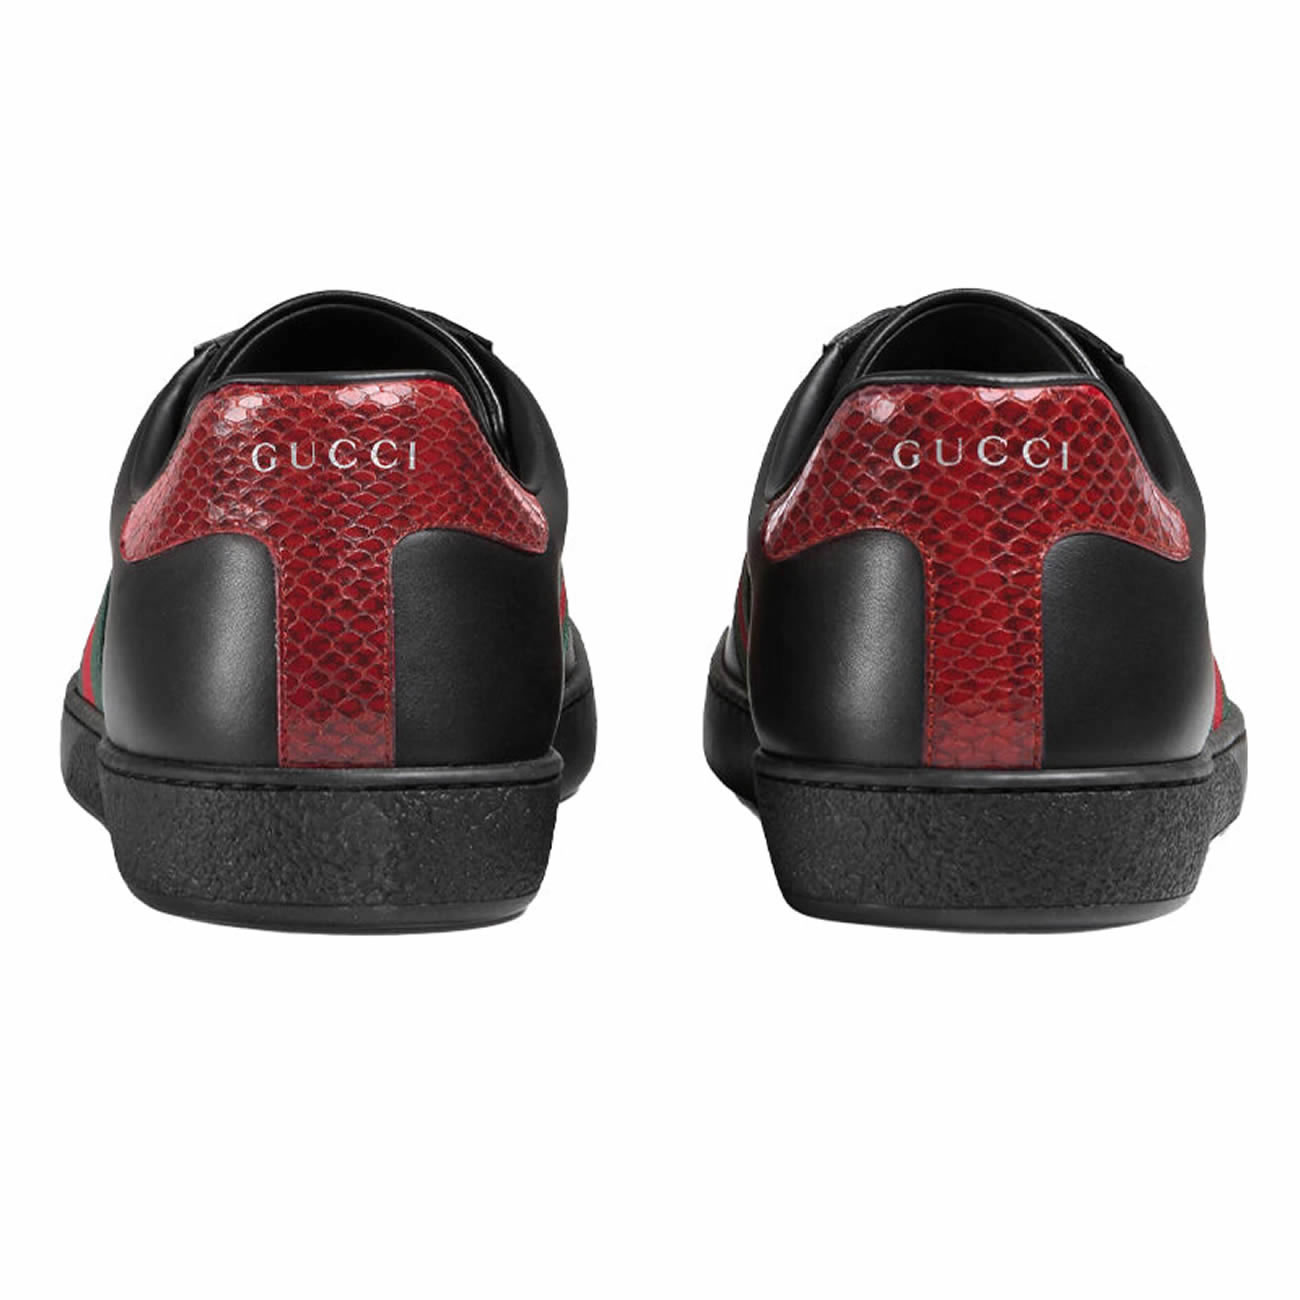 Gucci Ace Leather Black 386750 02jr0 1078 (5) - newkick.org